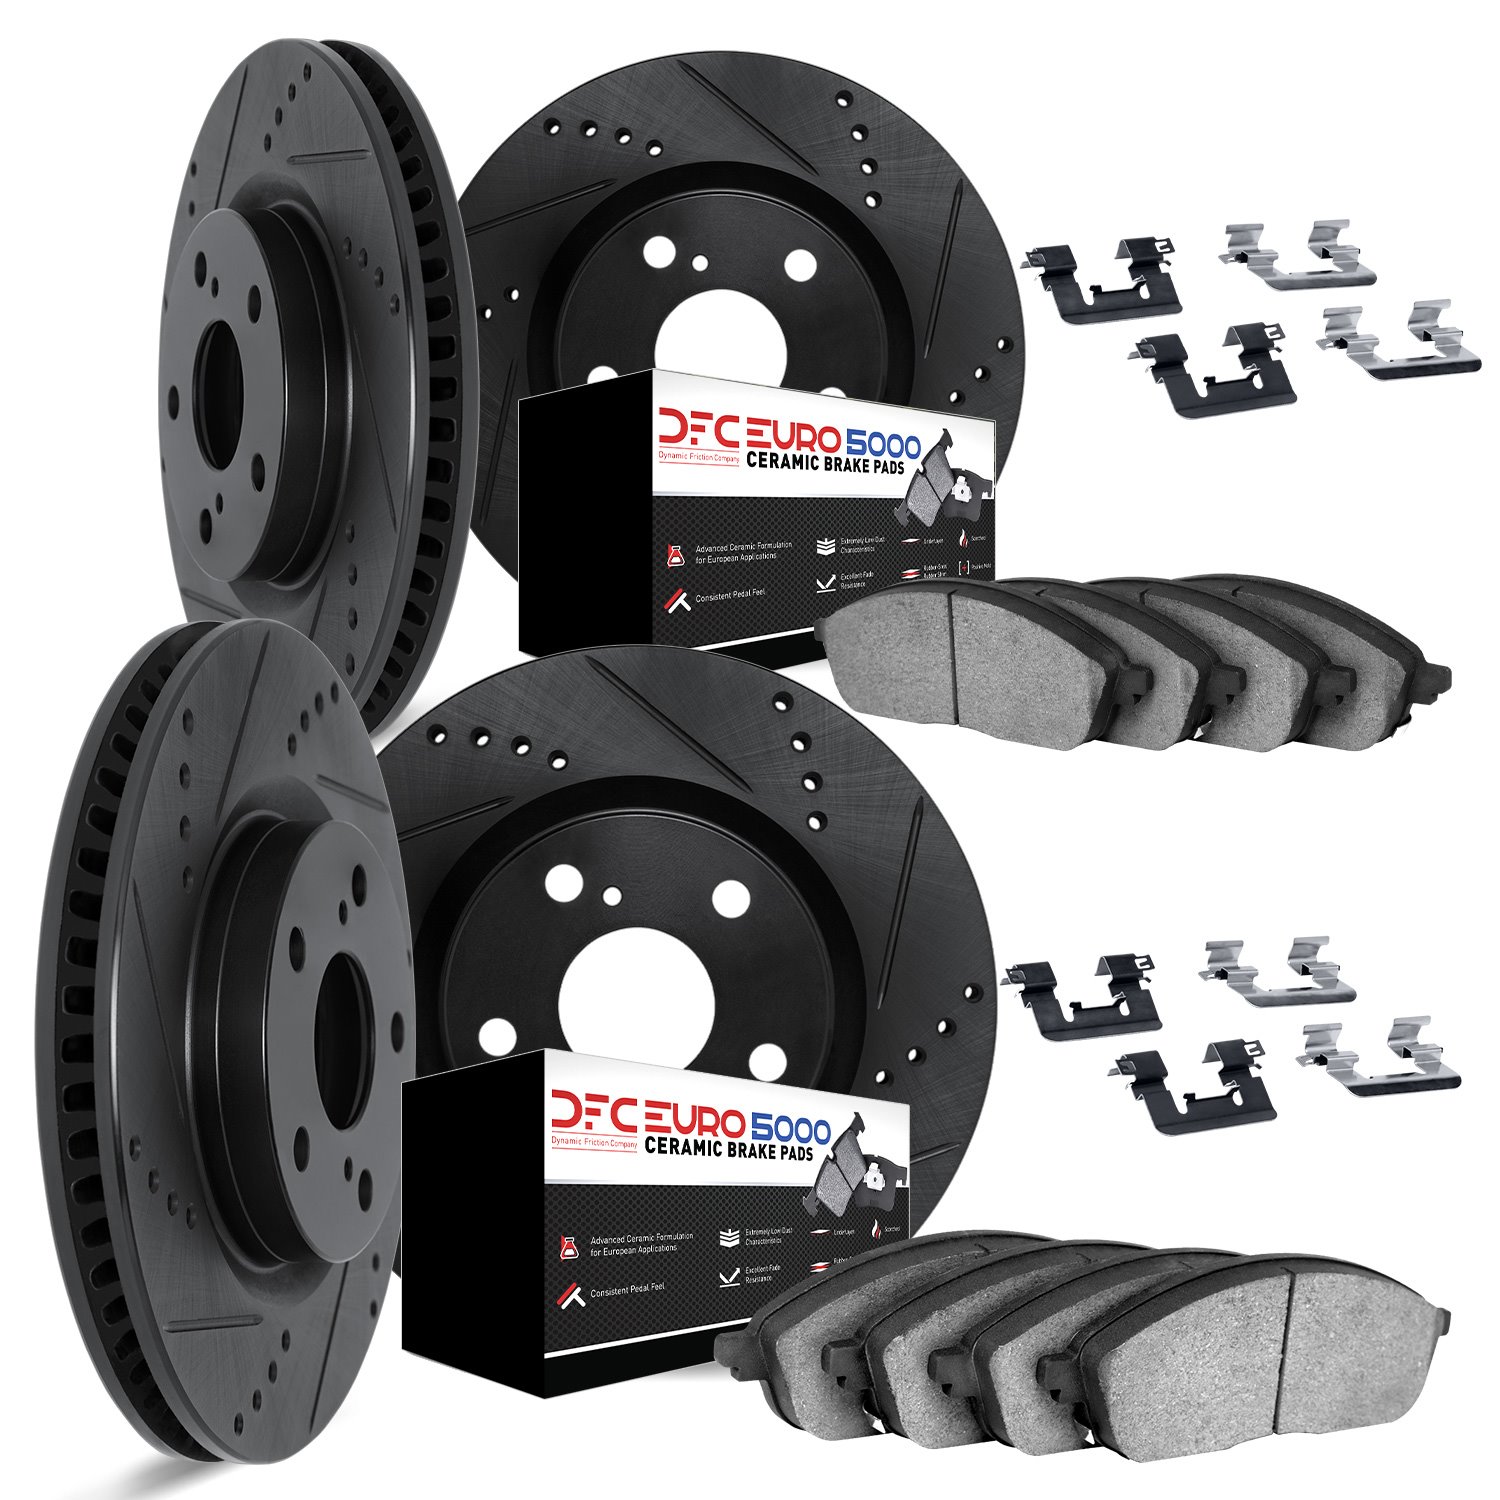 8614-67004 Drilled/Slotted Brake Rotors w/5000 Euro Ceramic Brake Pads Kit & Hardware [Black], Fits Select Multiple Makes/Models